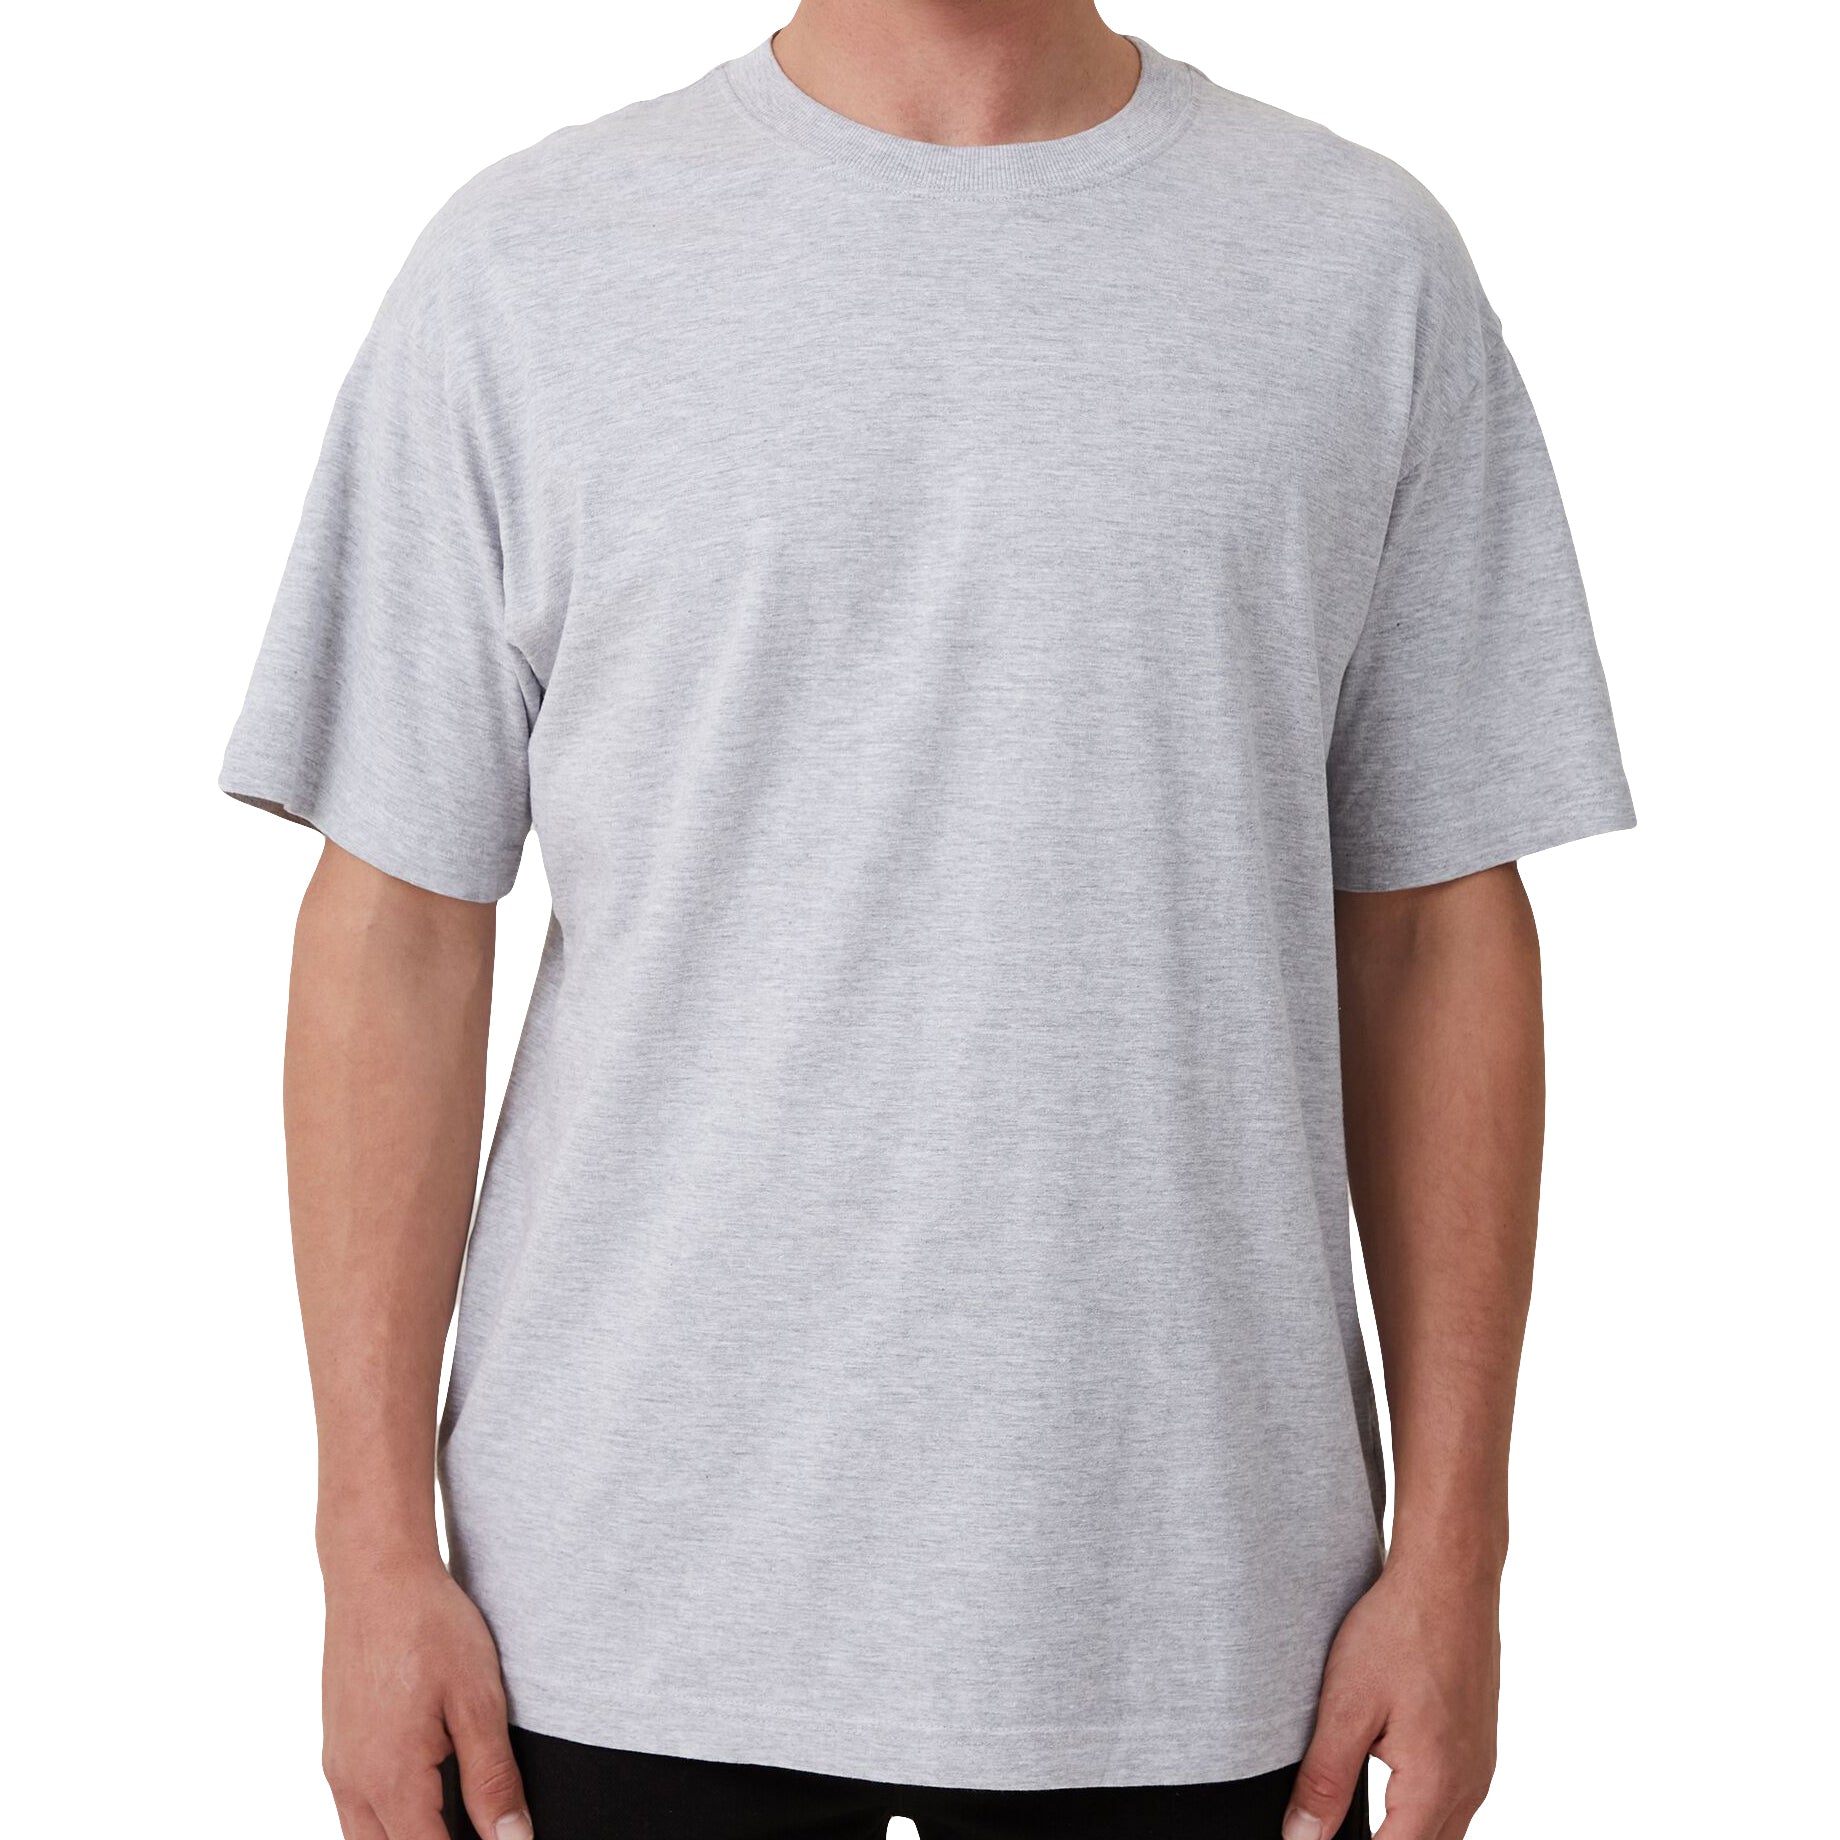 Adult 100% Cotton T-Shirt Unisex Men's Basic Plain Blank Crew Tee Tops Shirts, White, M